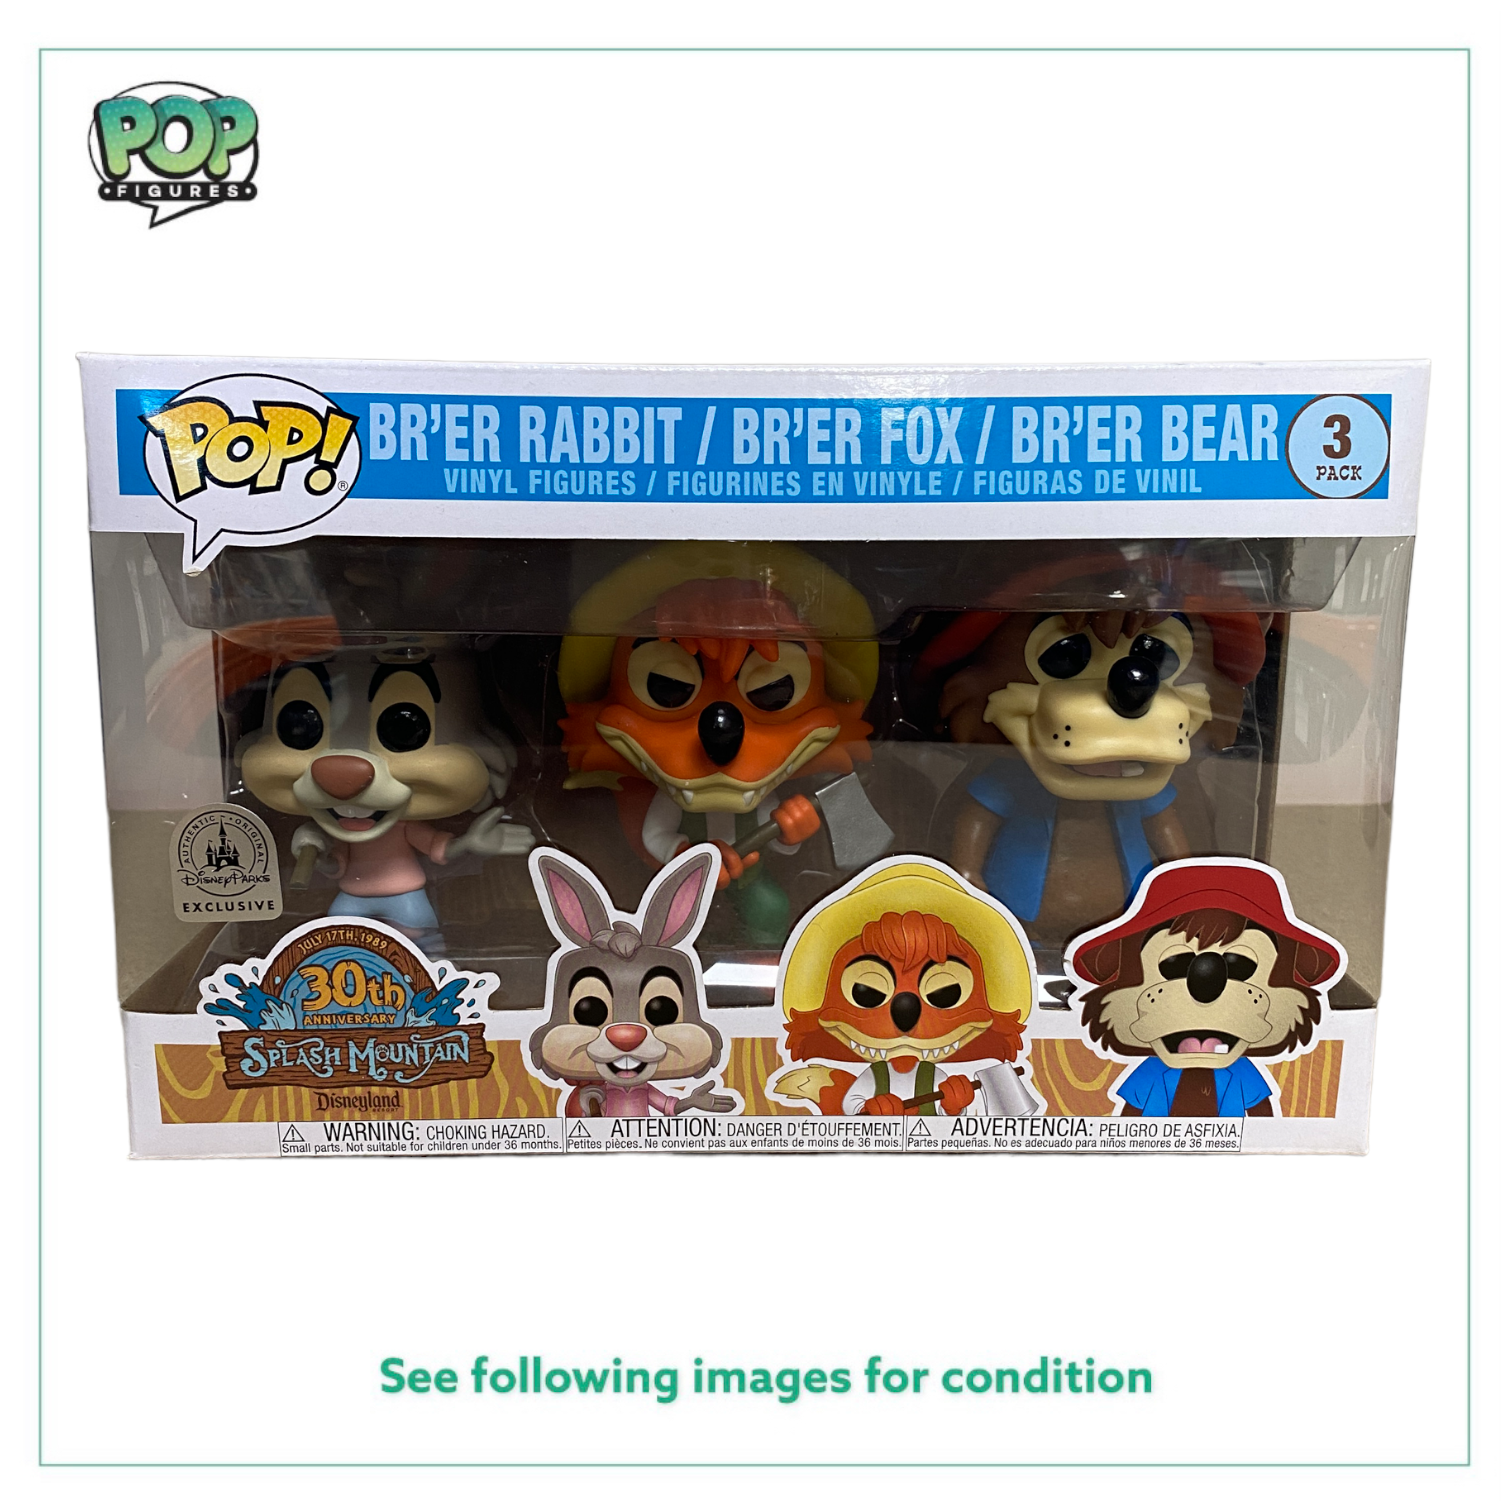 Br'er Rabbit / Br'er Fox / Br'er Bear 3 Pack Funko Pop! - Splash Mountain - Disney Parks Exclusive - Condition 8.5/10